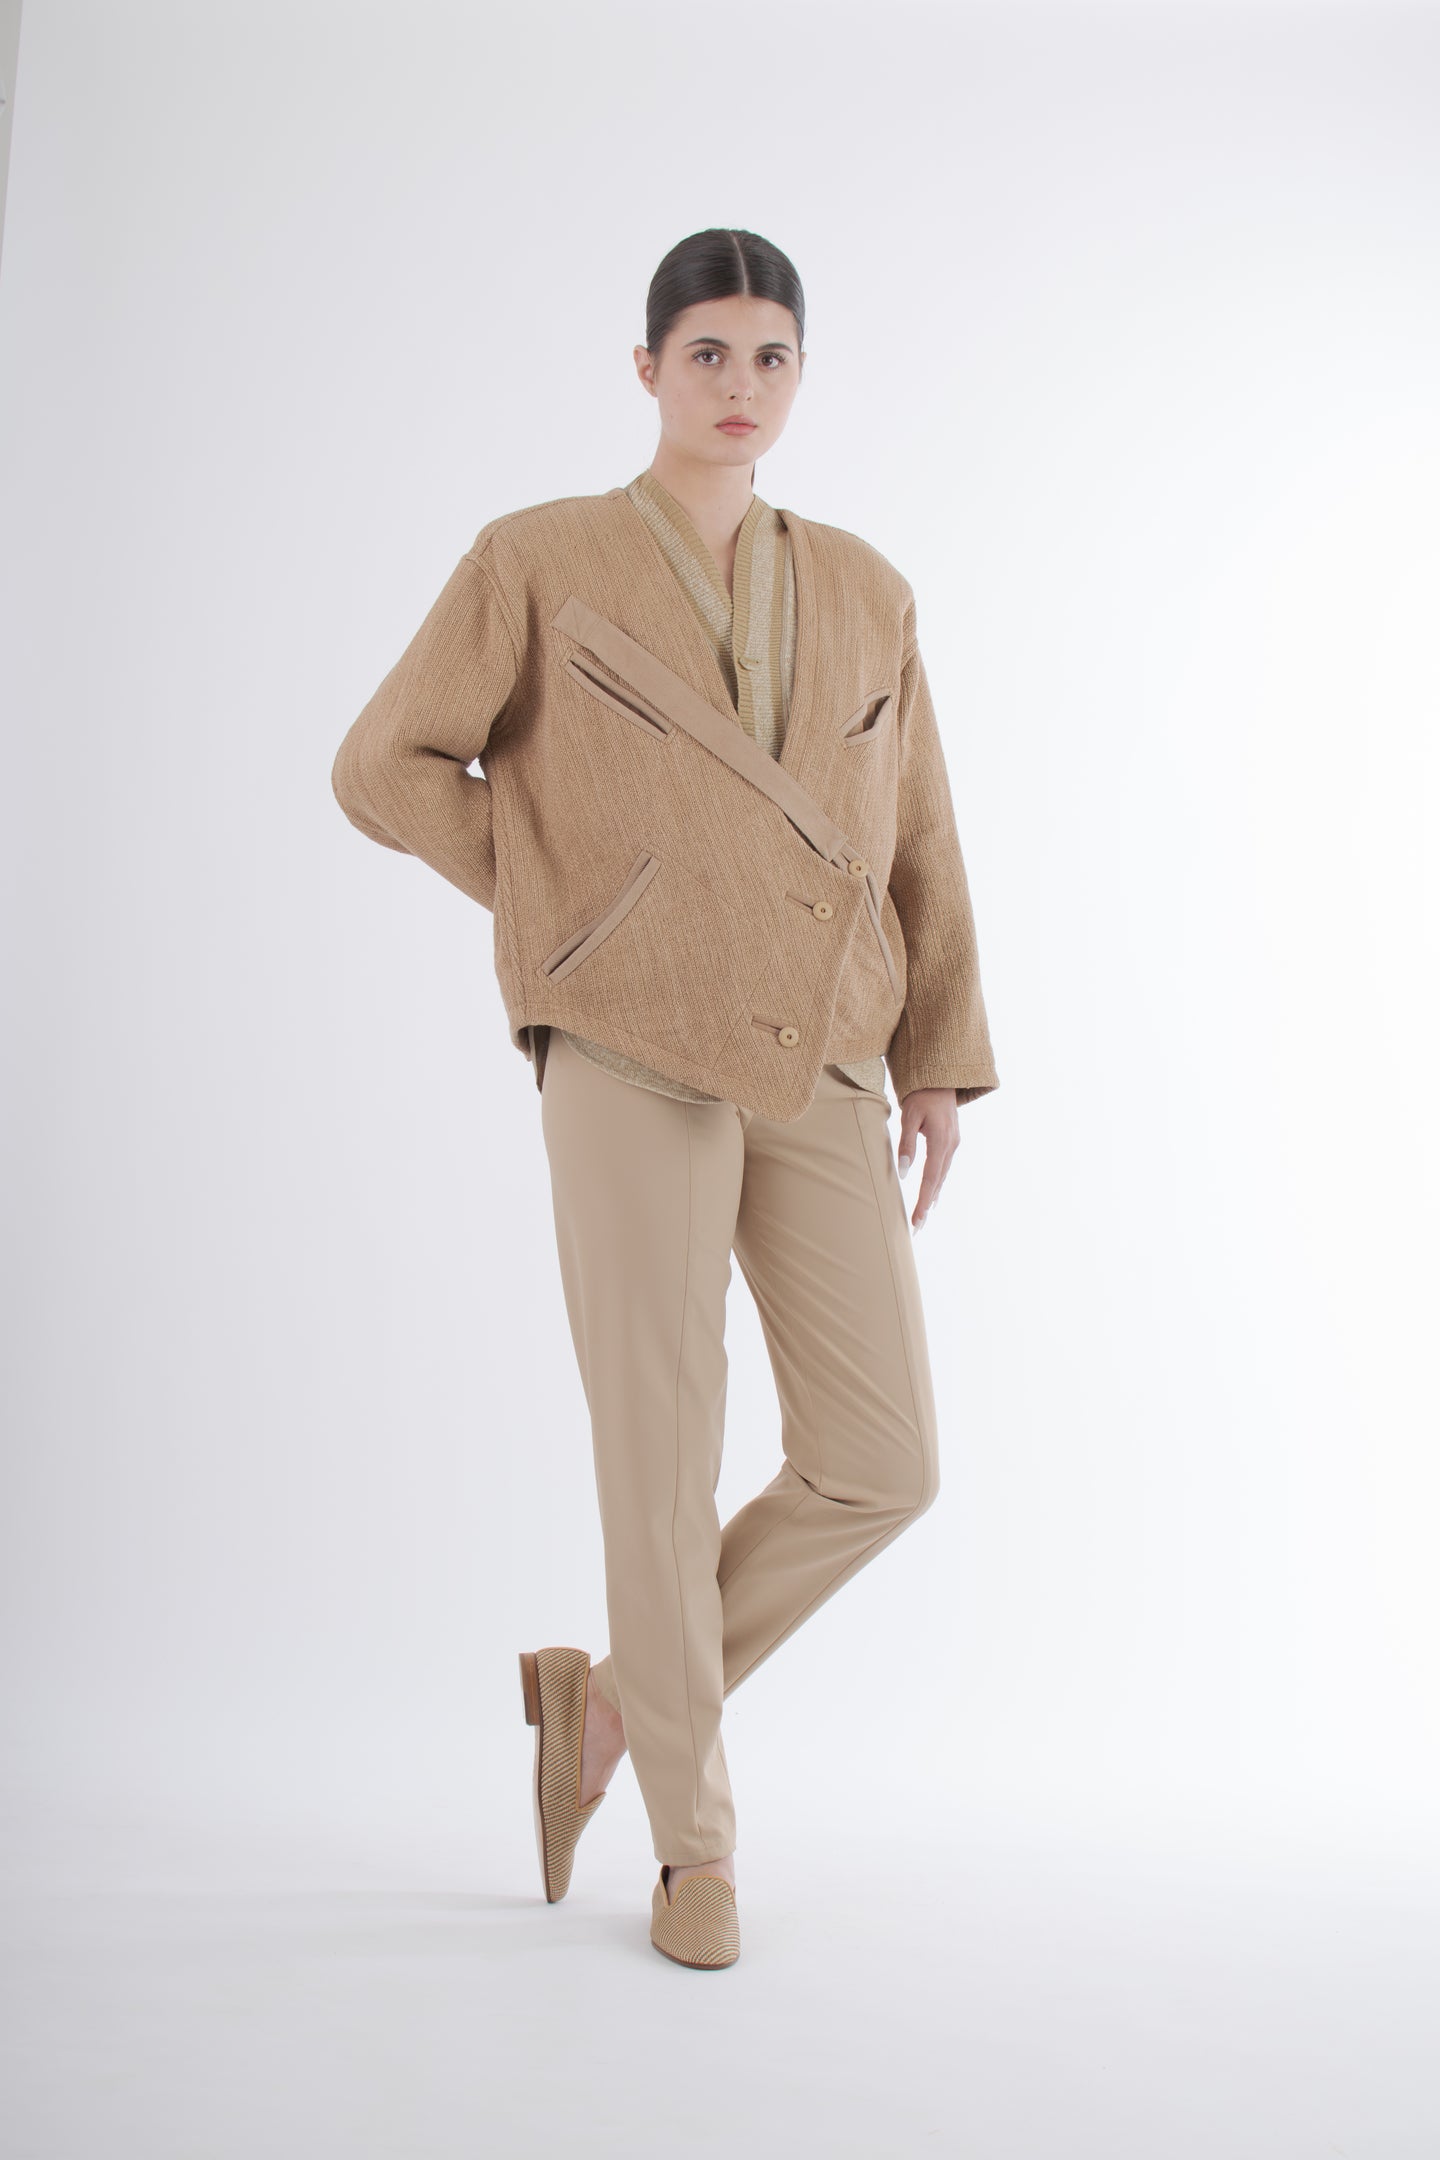 1985 Issey Miyake Avant-garde Woven Textile Jacket